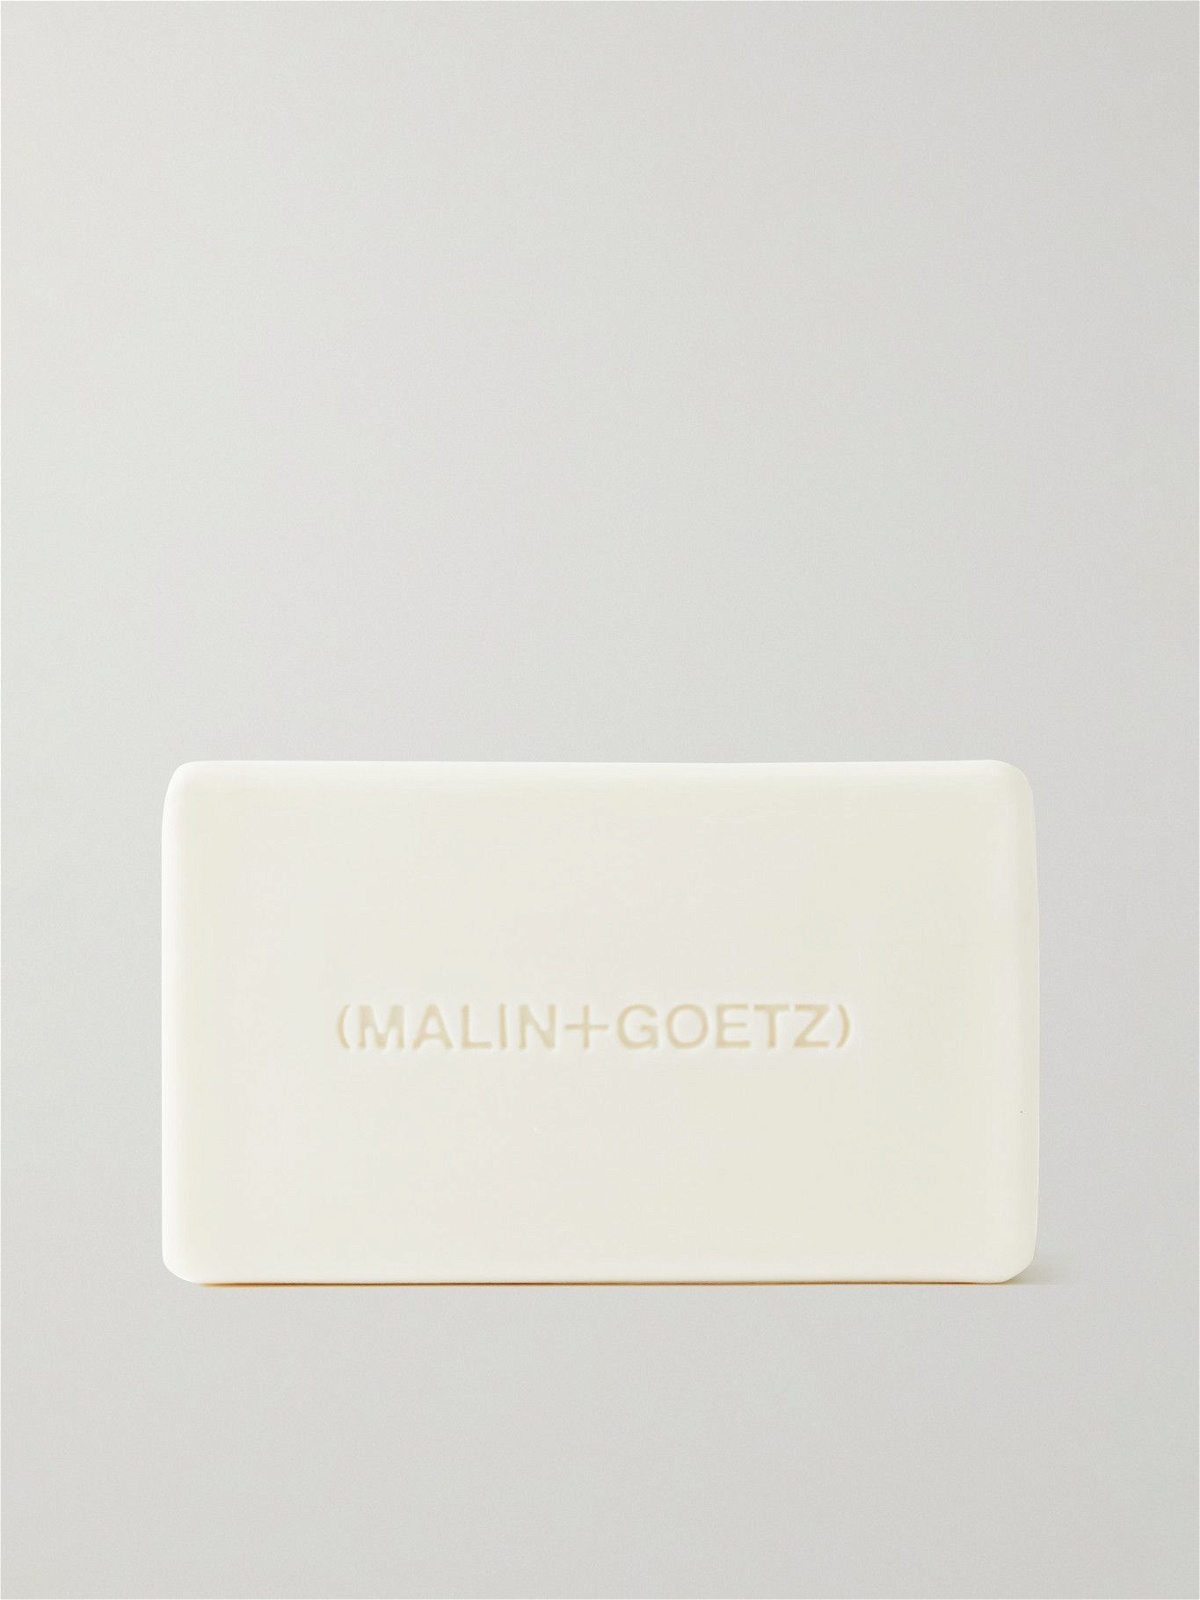 Malin Goetz - Lime Bar Soap, 140g